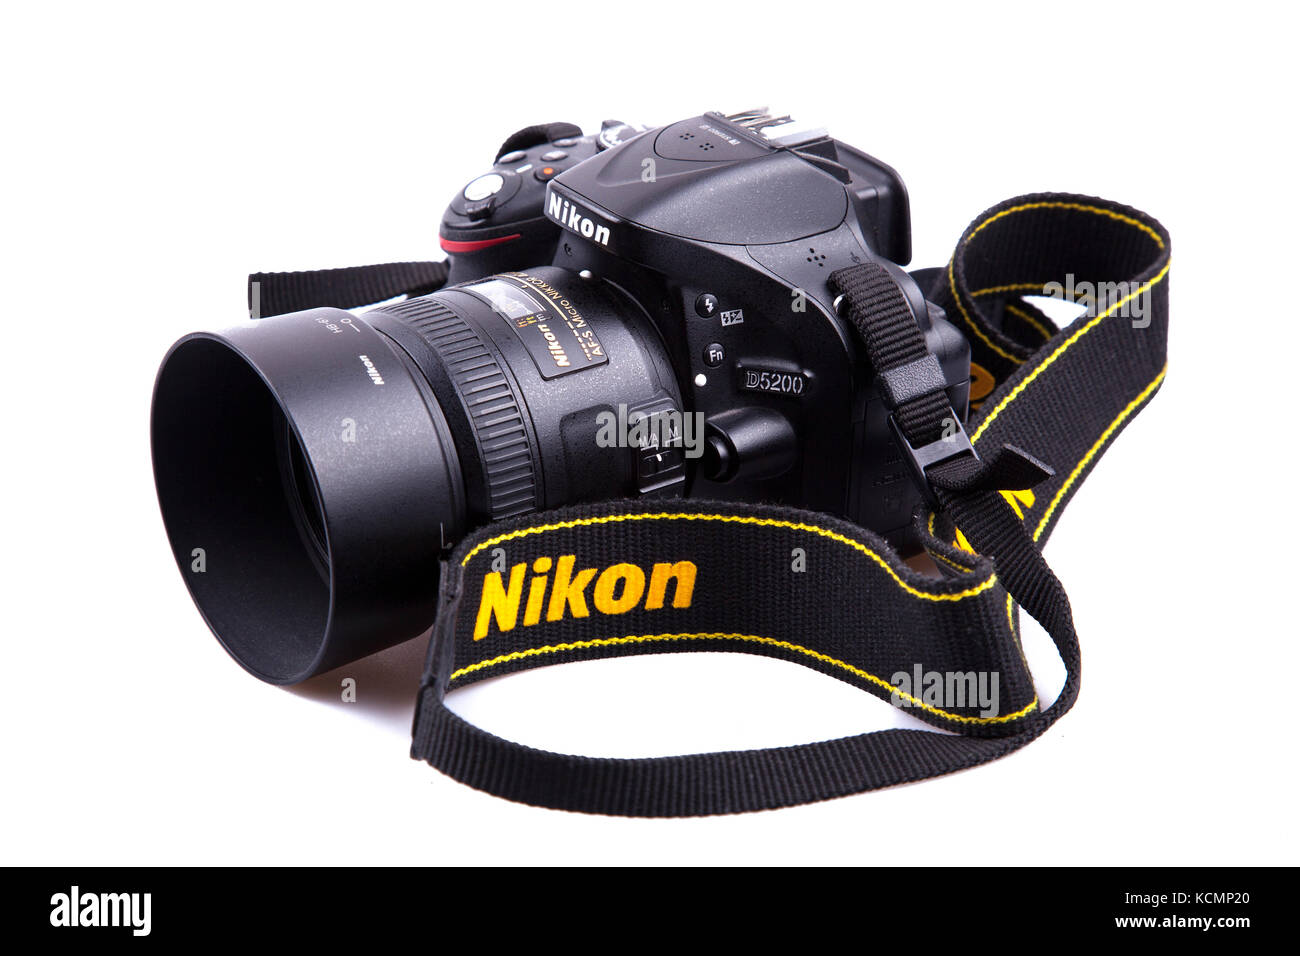 Uitgraving Waarnemen Superioriteit Nikon d5200 hi-res stock photography and images - Alamy